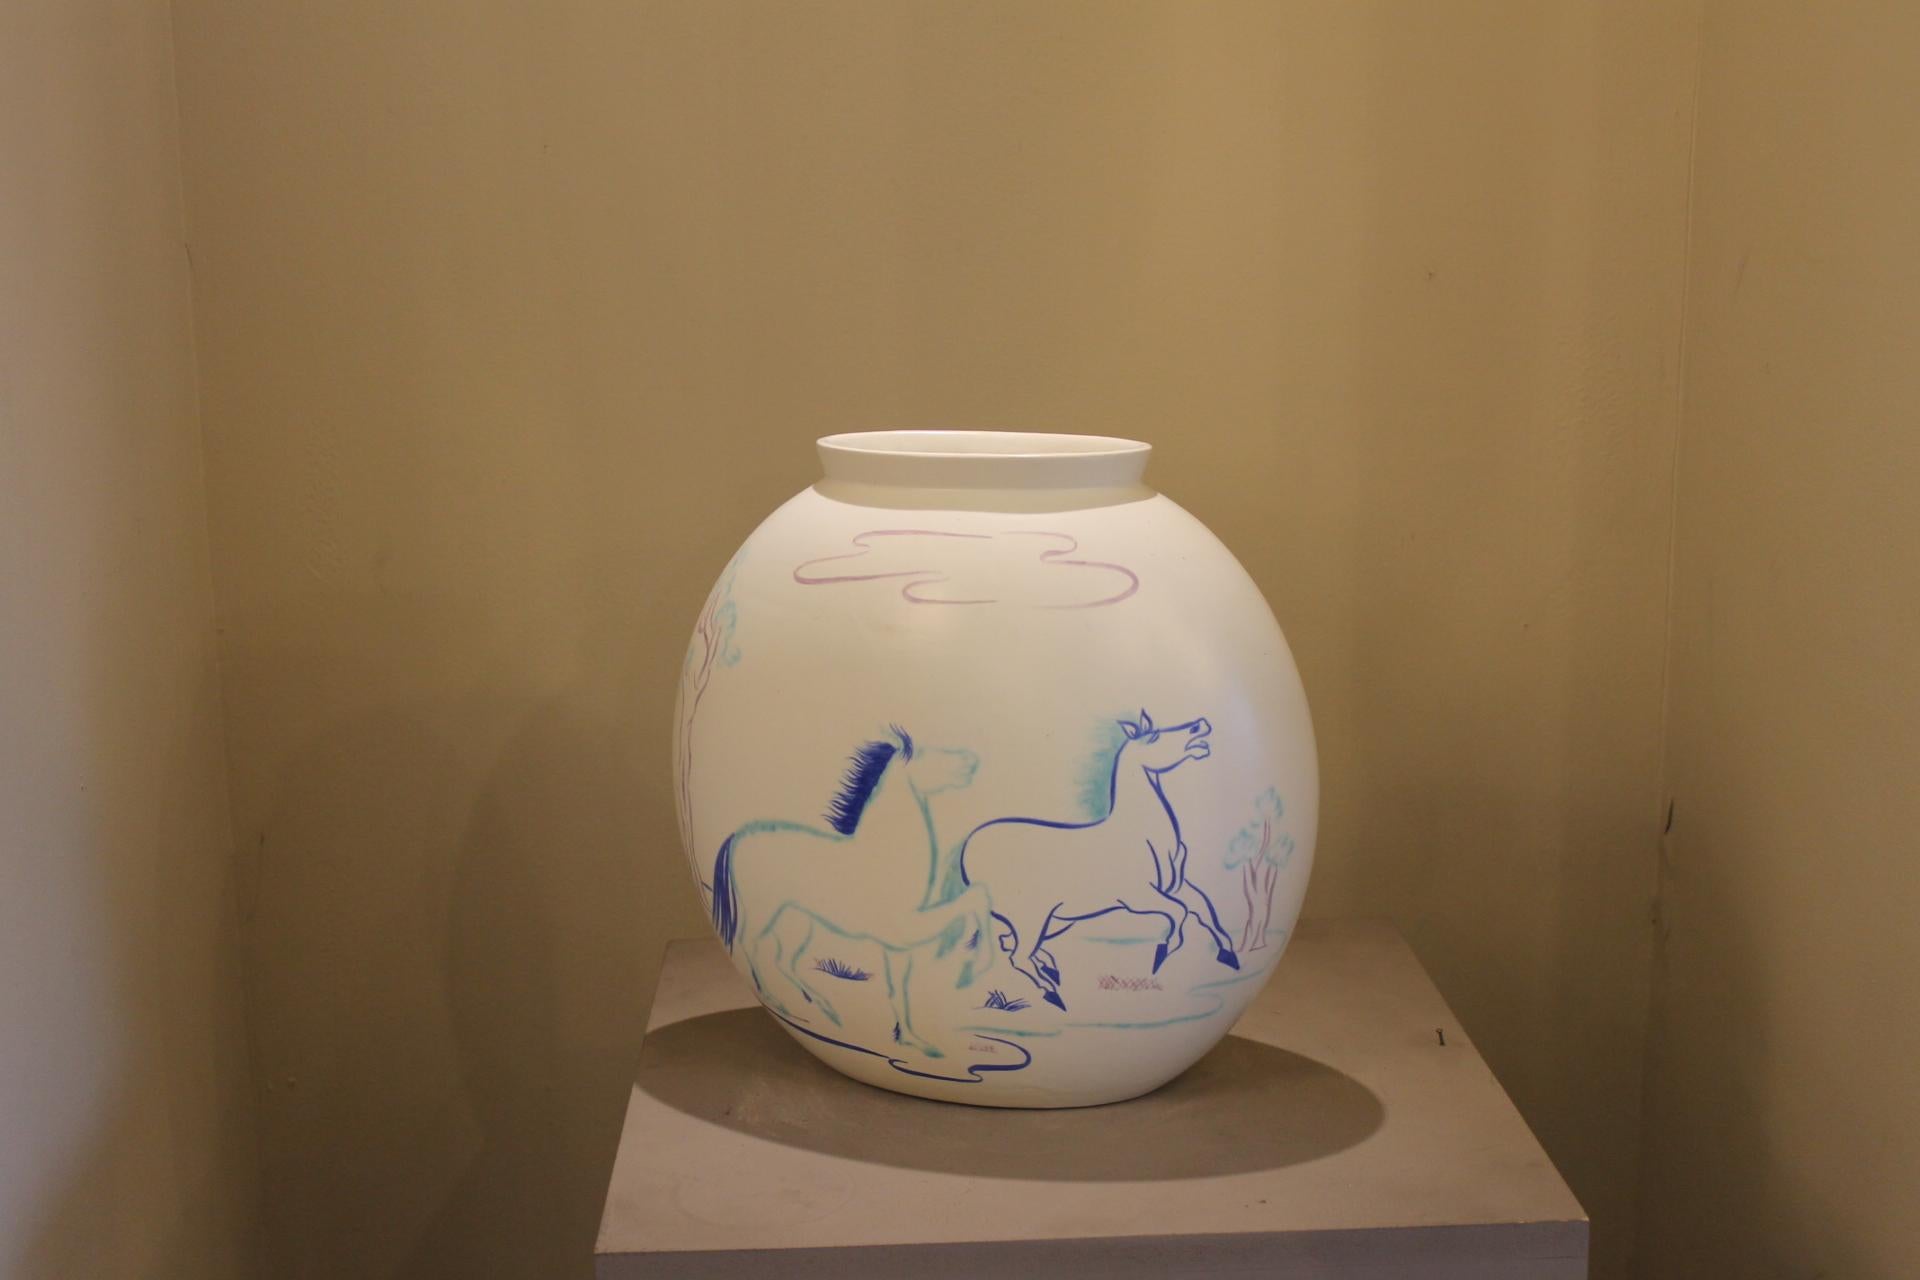 Cream-colored vase, pair of horses decor, signed Lavenia, Guido Andloviz, Italy 1970.
